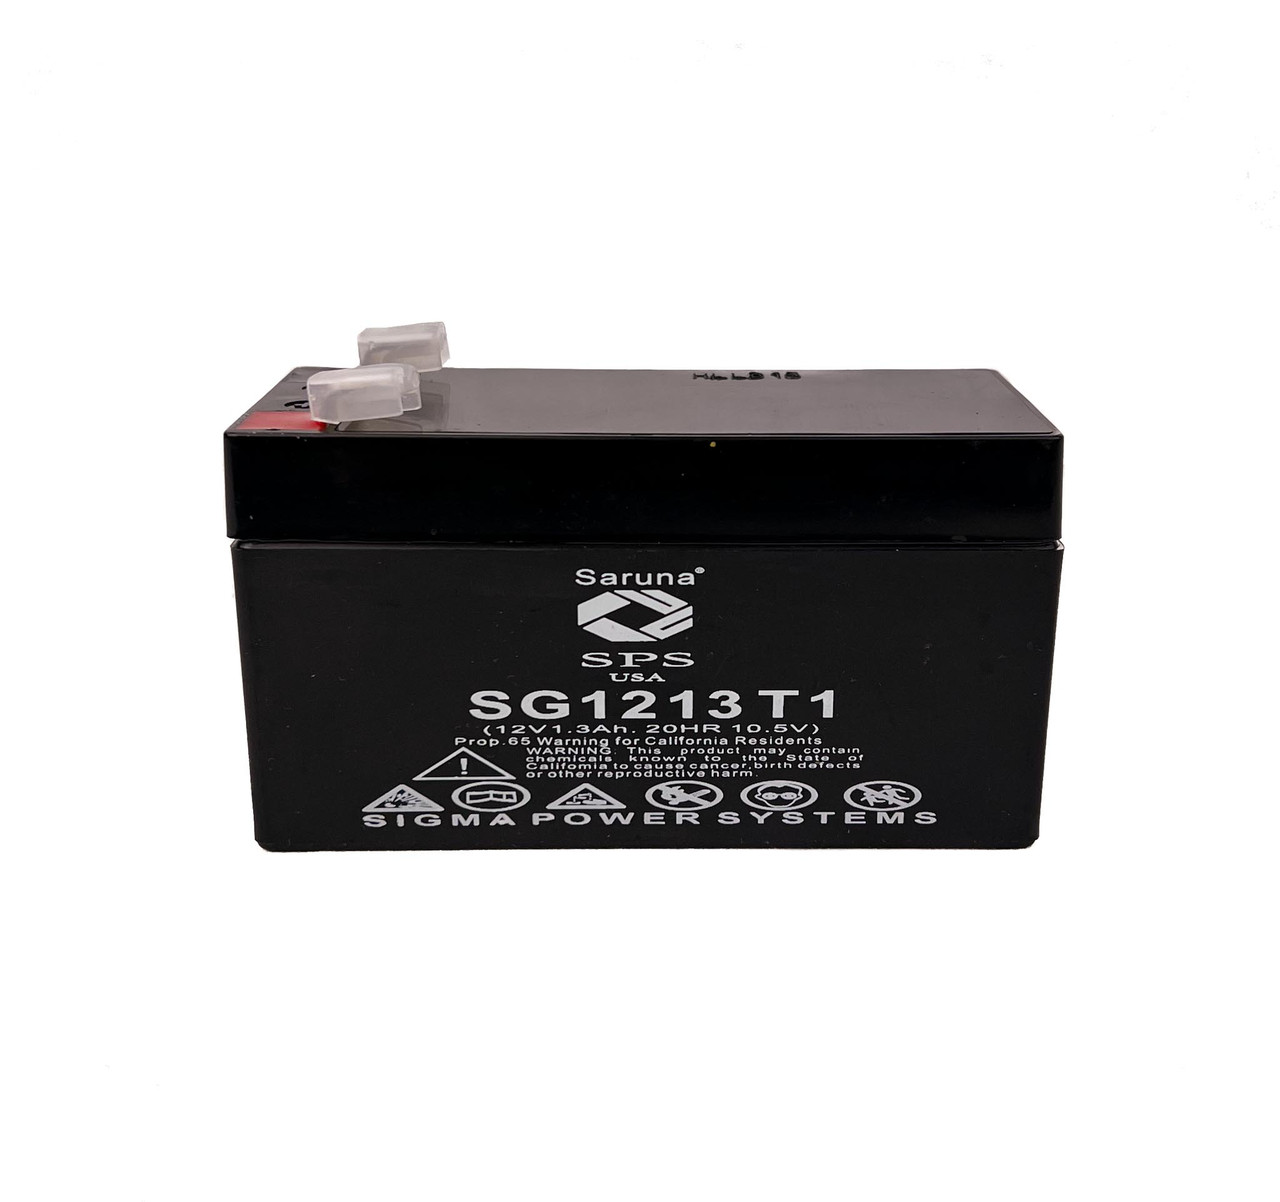 Raion Power RG1213T1 12V 1.3Ah Compatible Replacement Battery for Mortara ELI 50 ECG Recorder